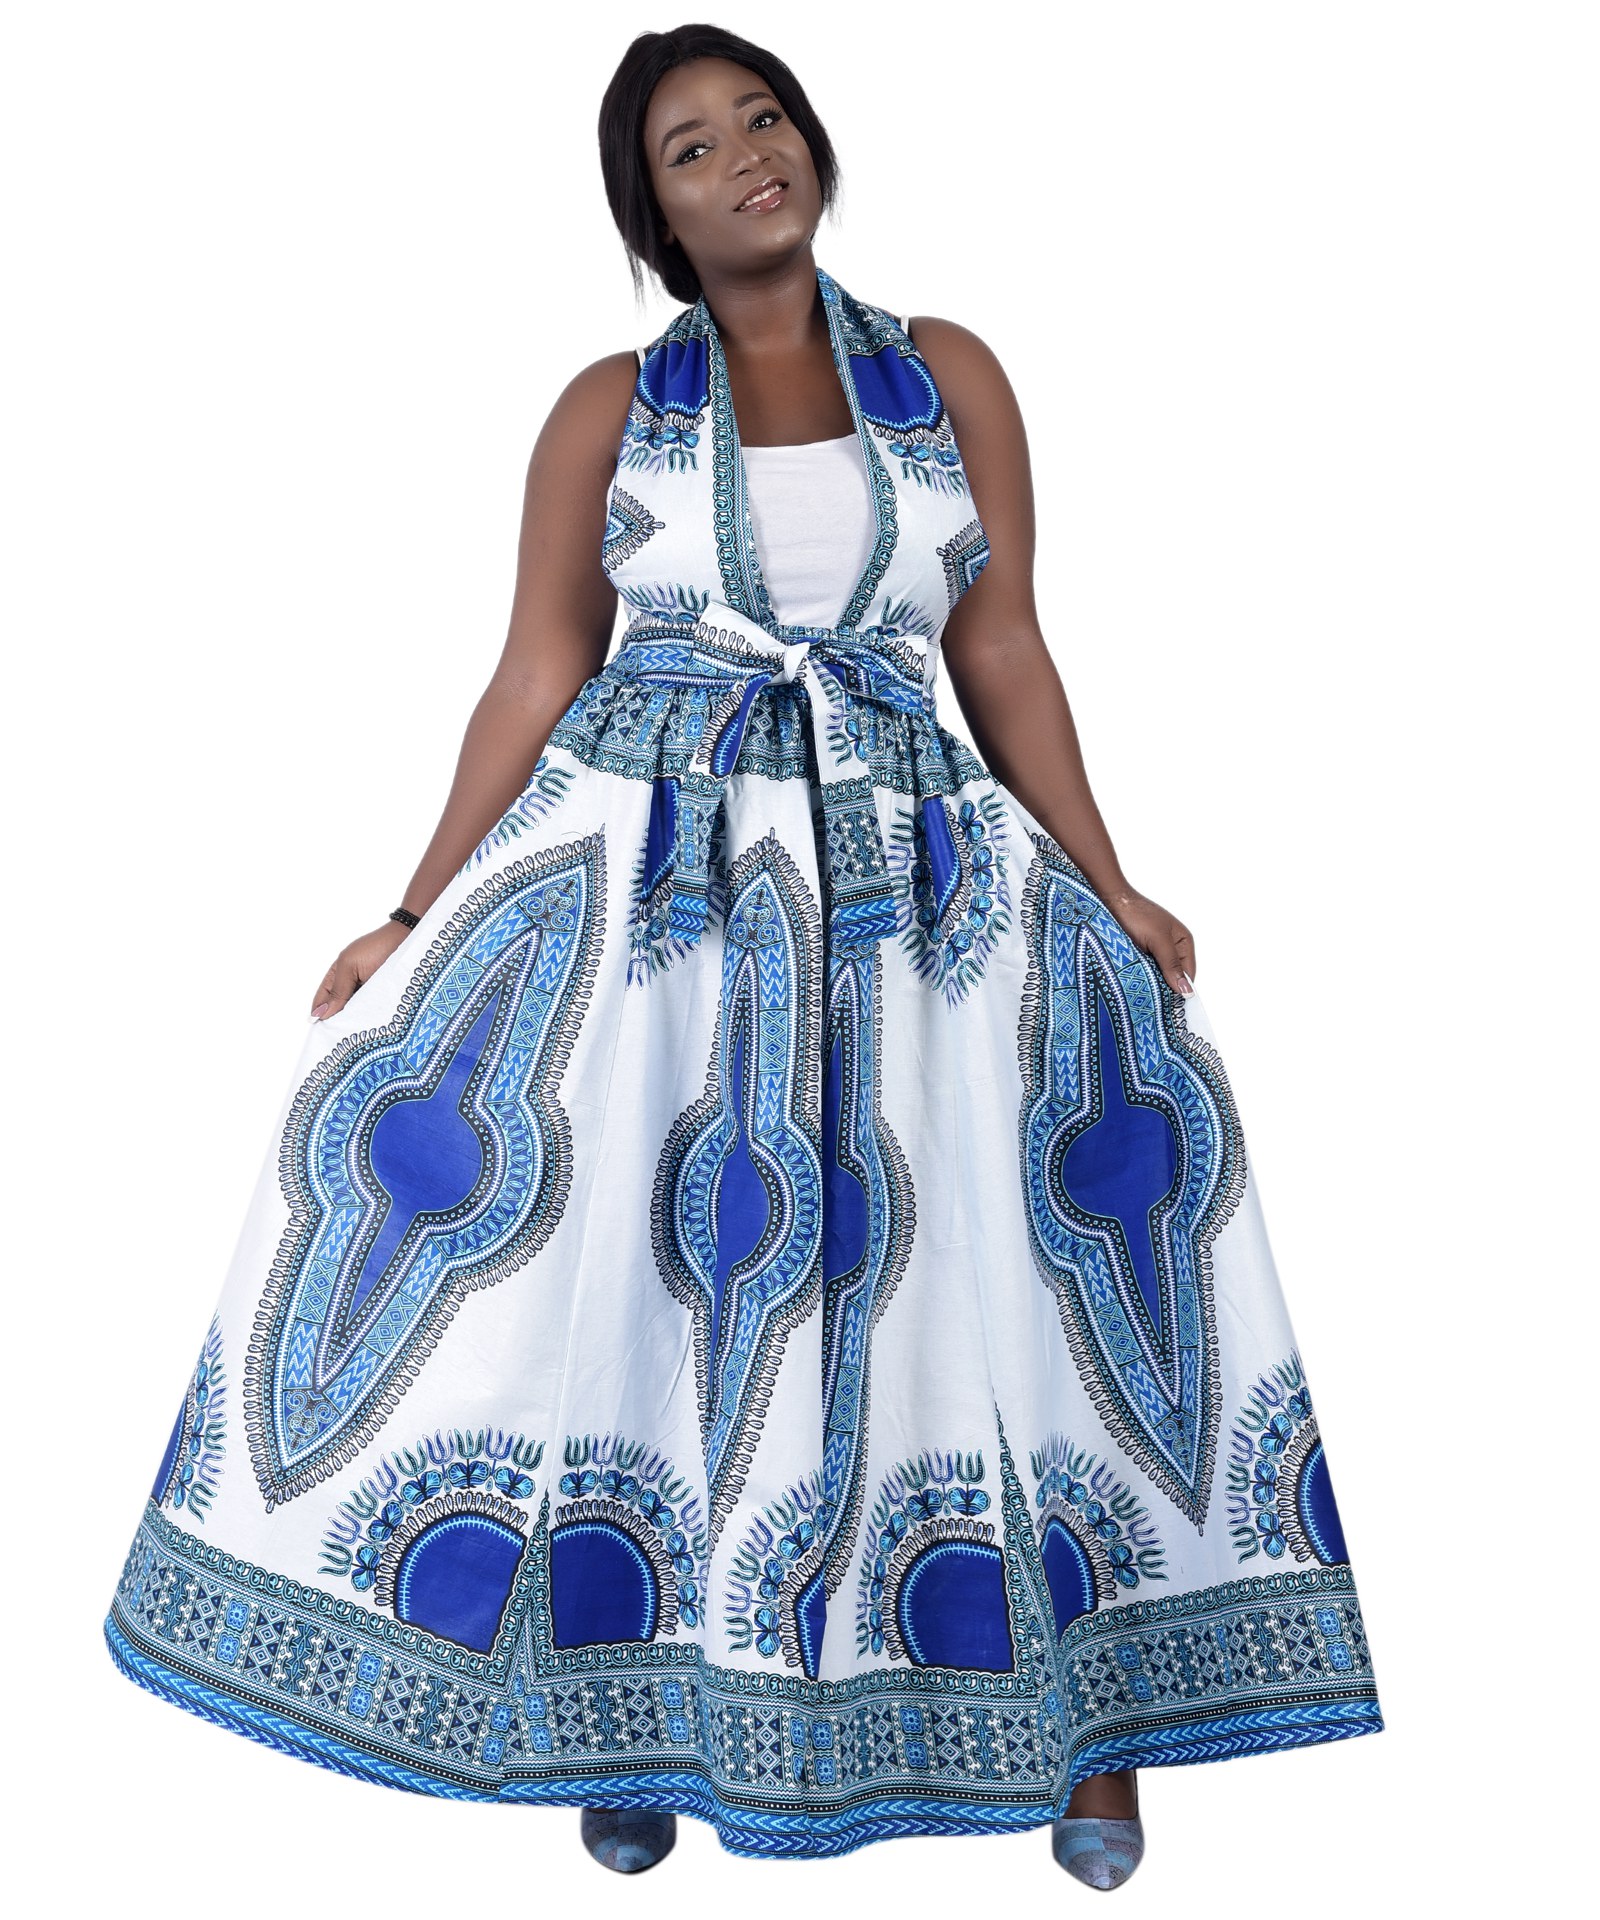 African print Skirt in Dashiki Wax Print | African Imports USA.com ...